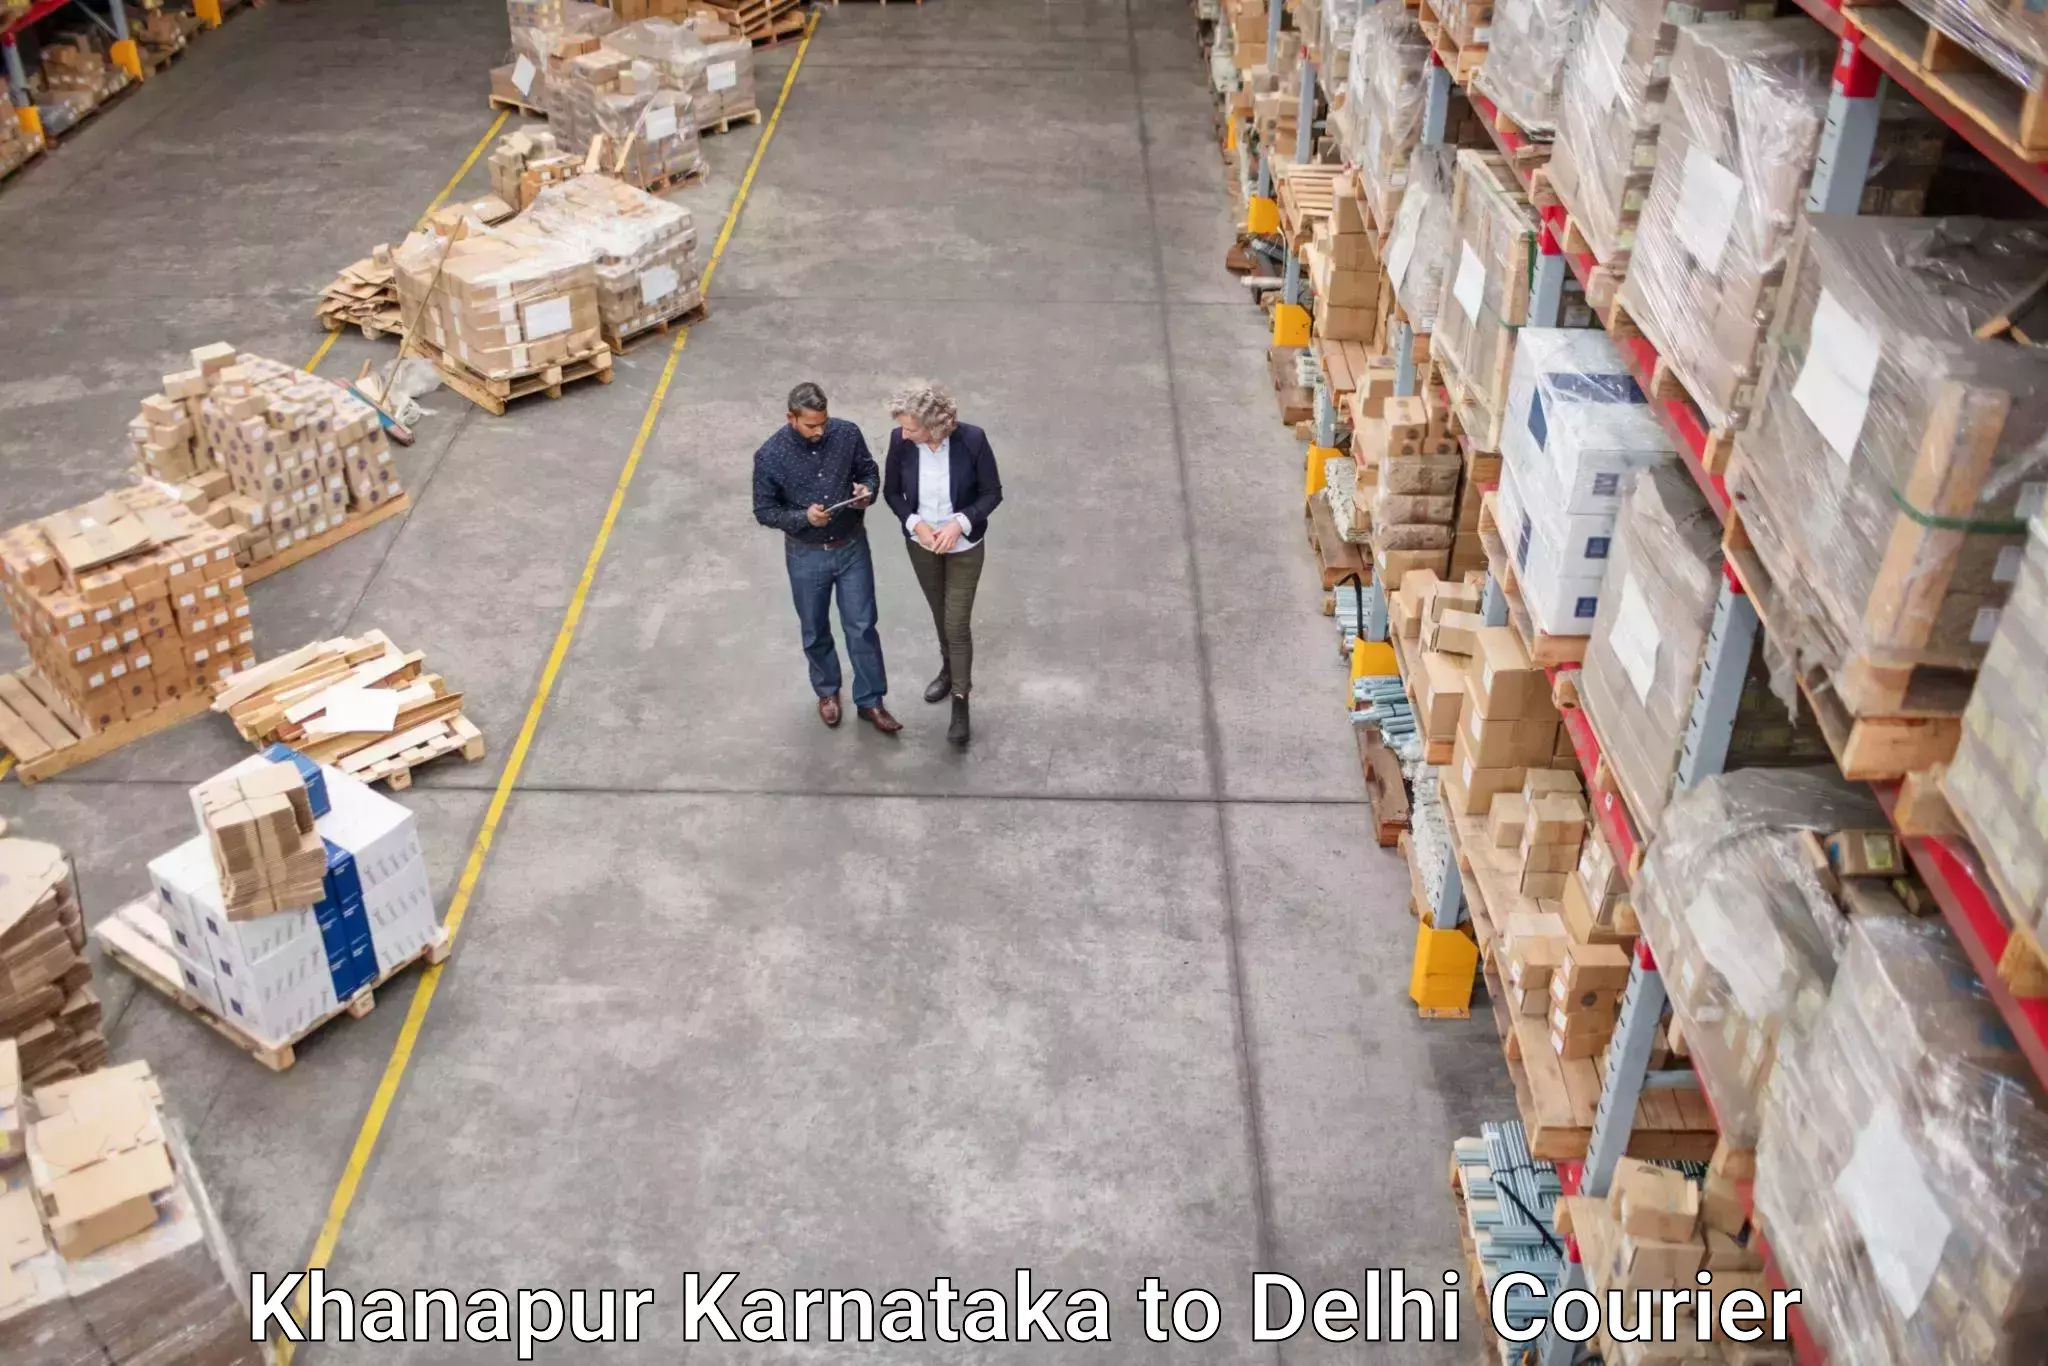 Courier service partnerships Khanapur Karnataka to Kalkaji